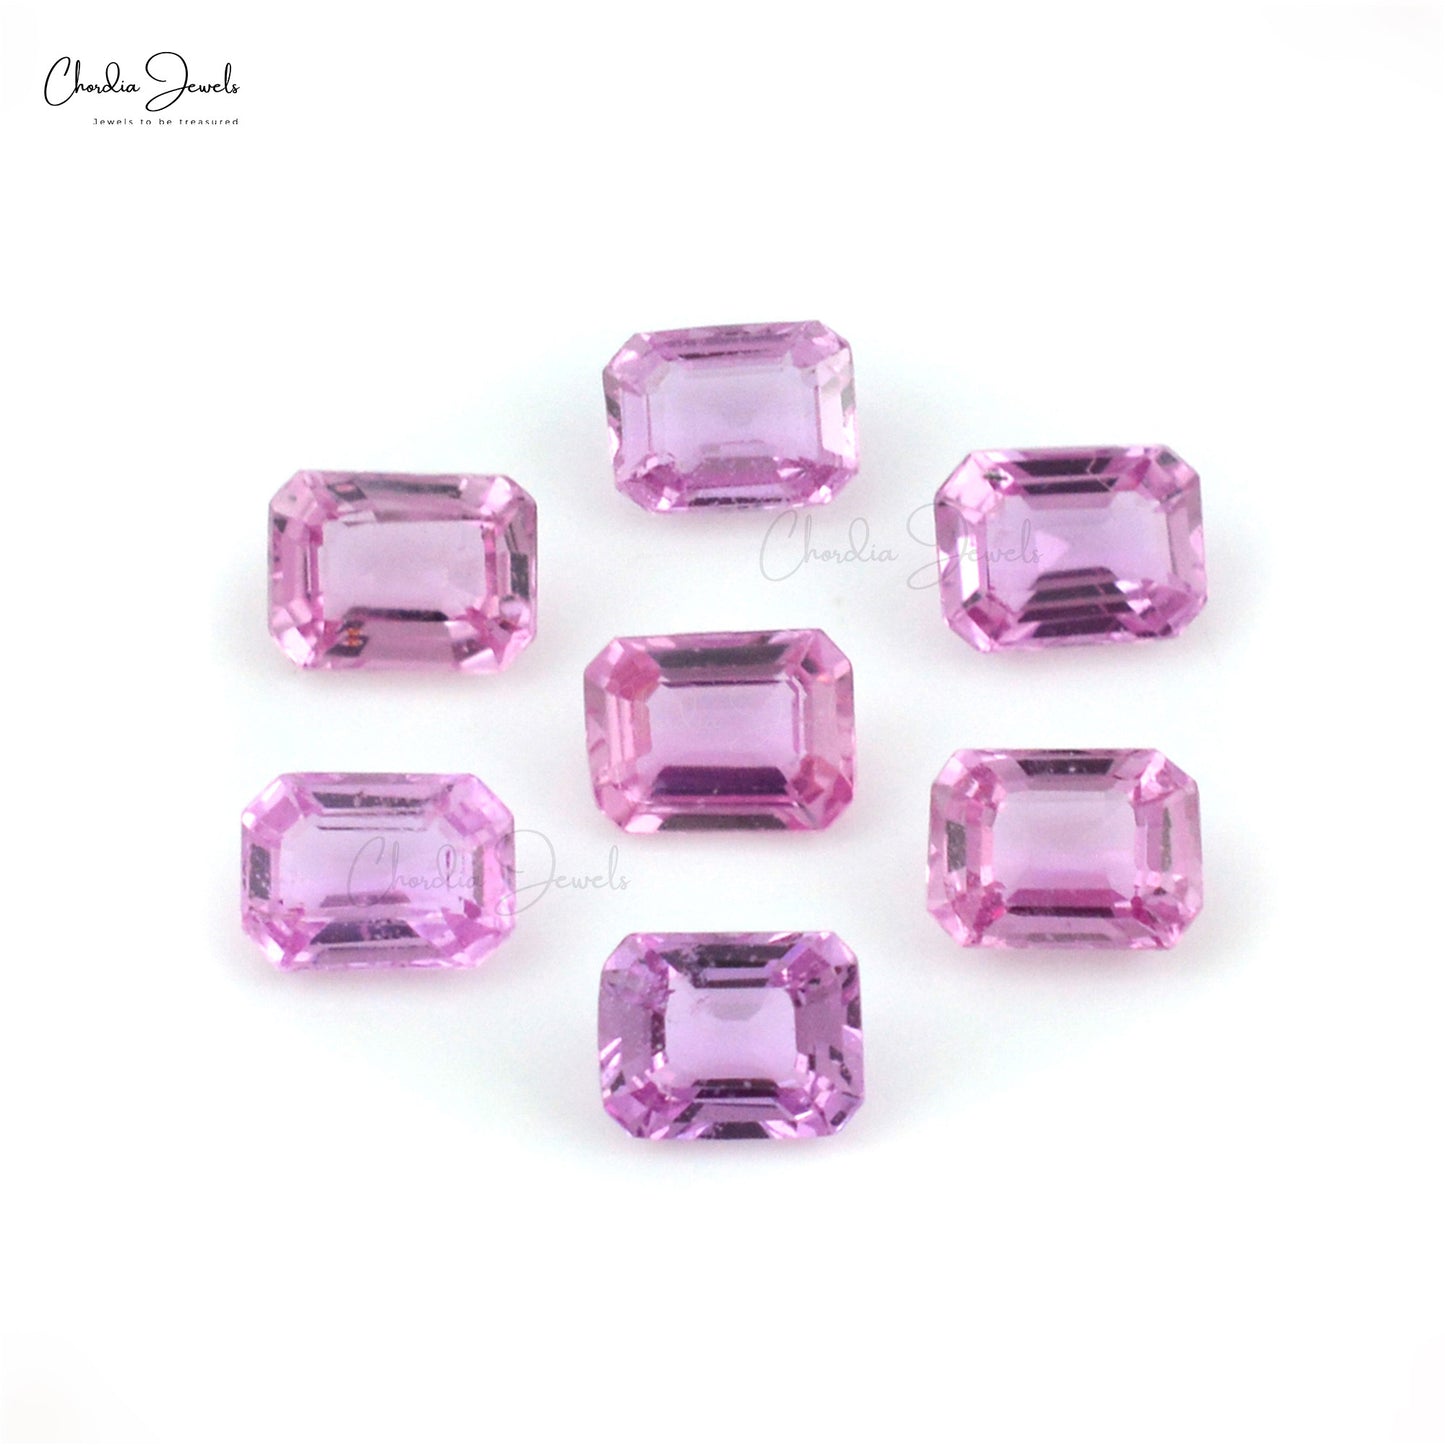 Natural Pink Sapphire Gemstone